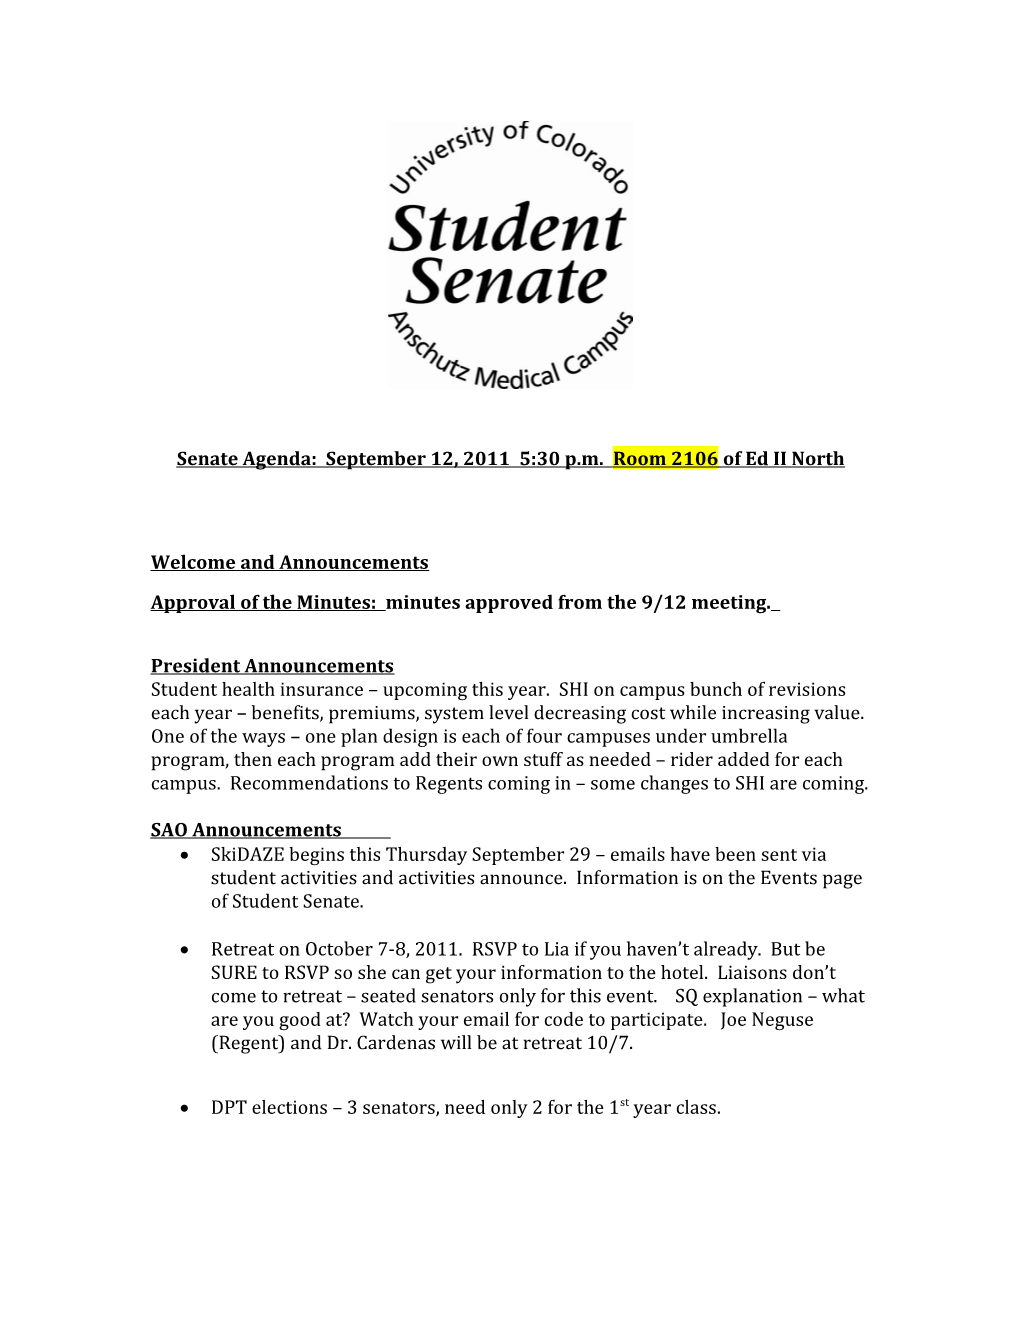 Senate Agenda: September 12, 2011 5:30 P.M. Room 2106 of Ed II North